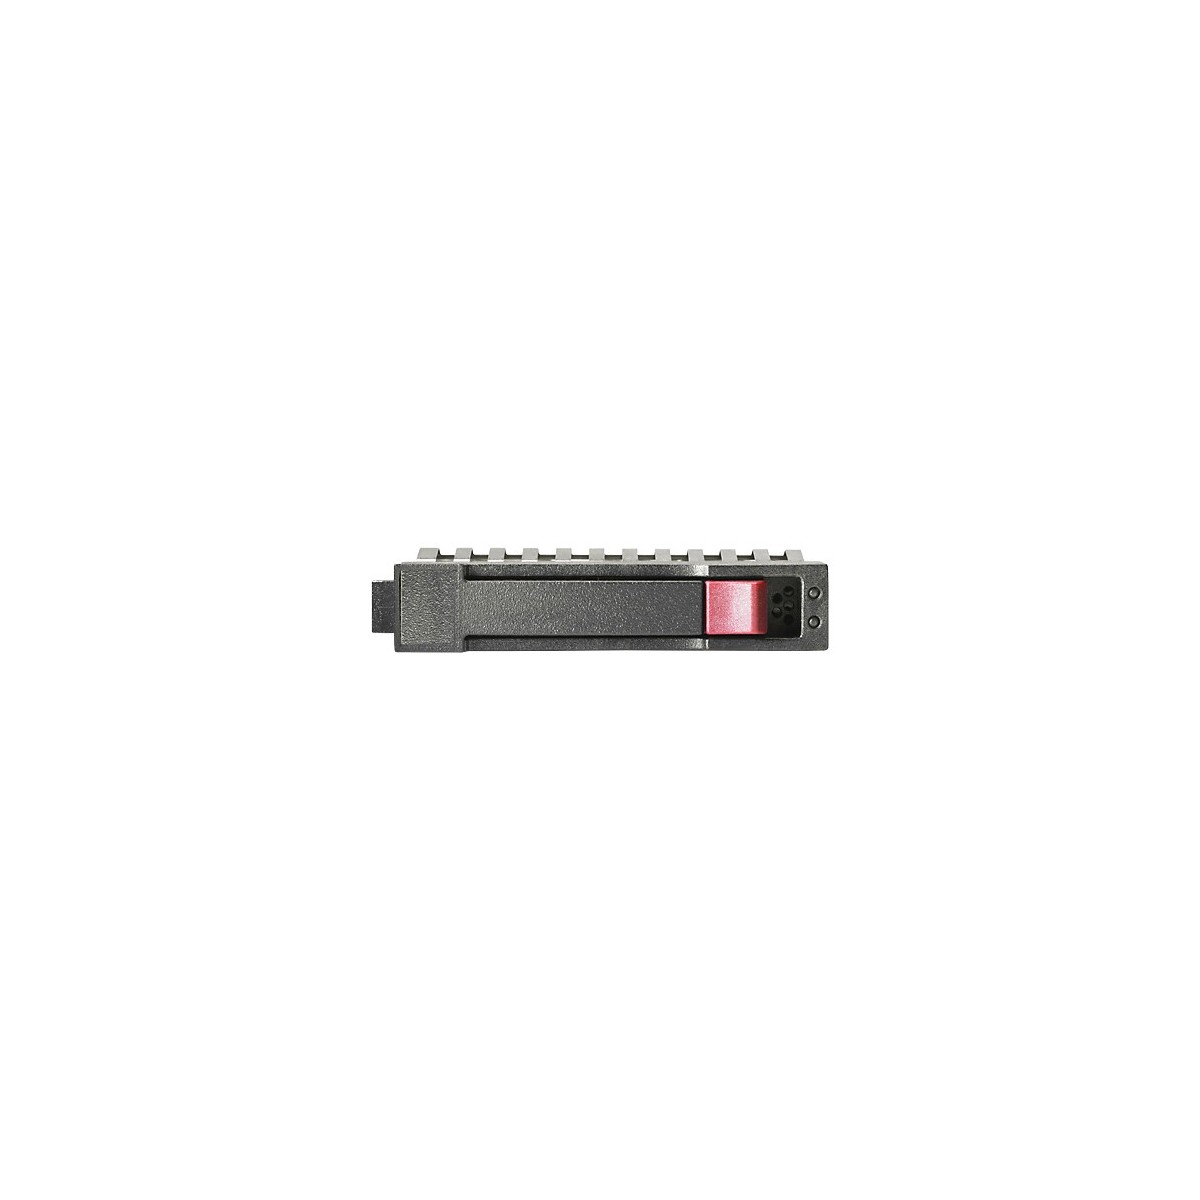 HPE MSA 300GB 12G SAS 10K SFF(2.5in) Dual Port Enterprise 3yr - 2.5 - 300 GB - 10000 RPM